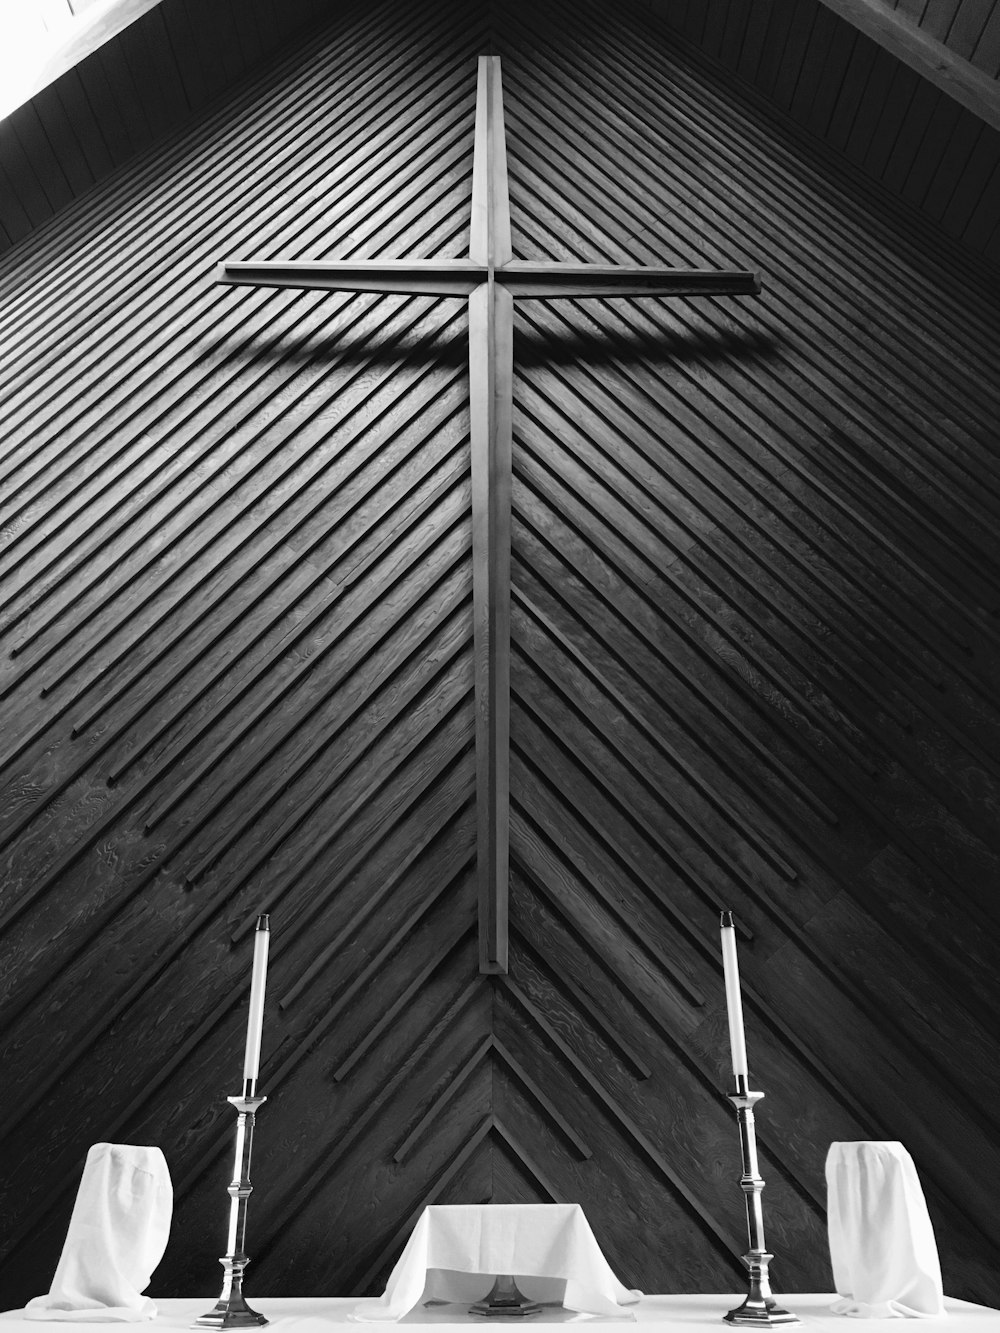 Kirchenaltar mit schwarzem Kreuz an der Wand